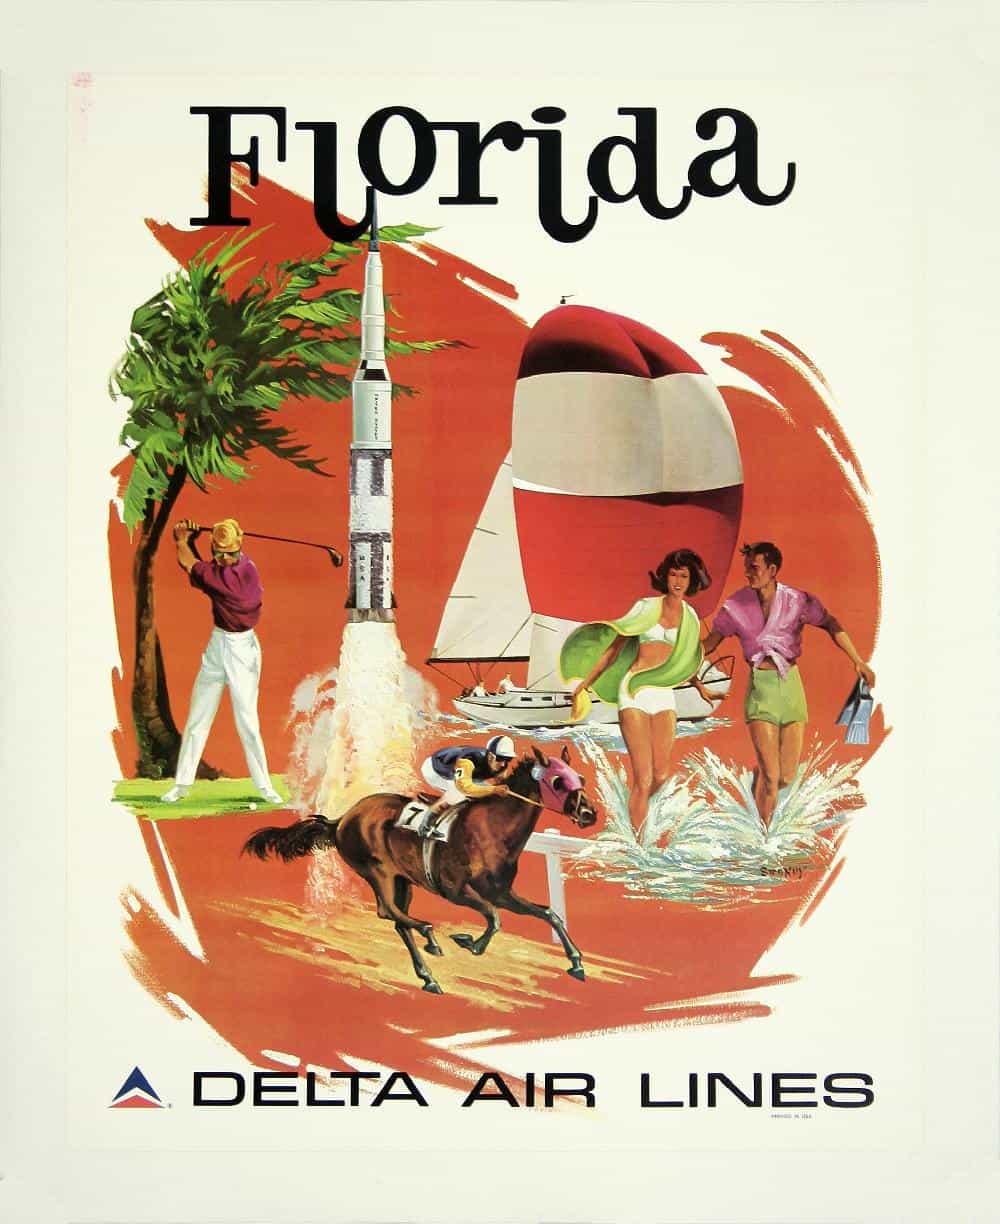 Delta Air Lines Florida Sweney 1974 Vintage Travel Poster